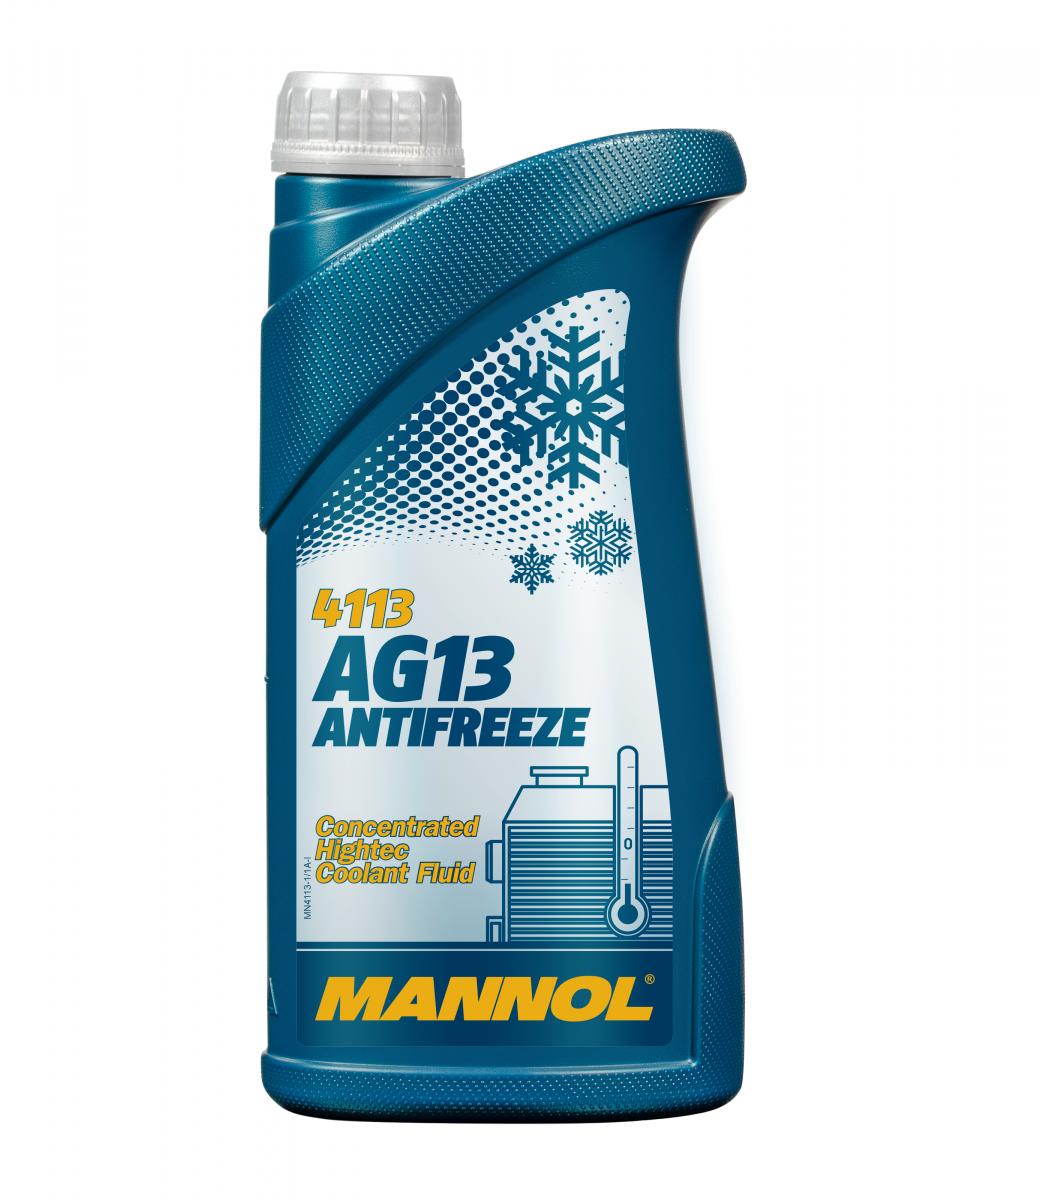 3 Liter (3x1) MANNOL hightech  Antifreeze AG13 Frostschutz Konzentrat grün -40°C G13